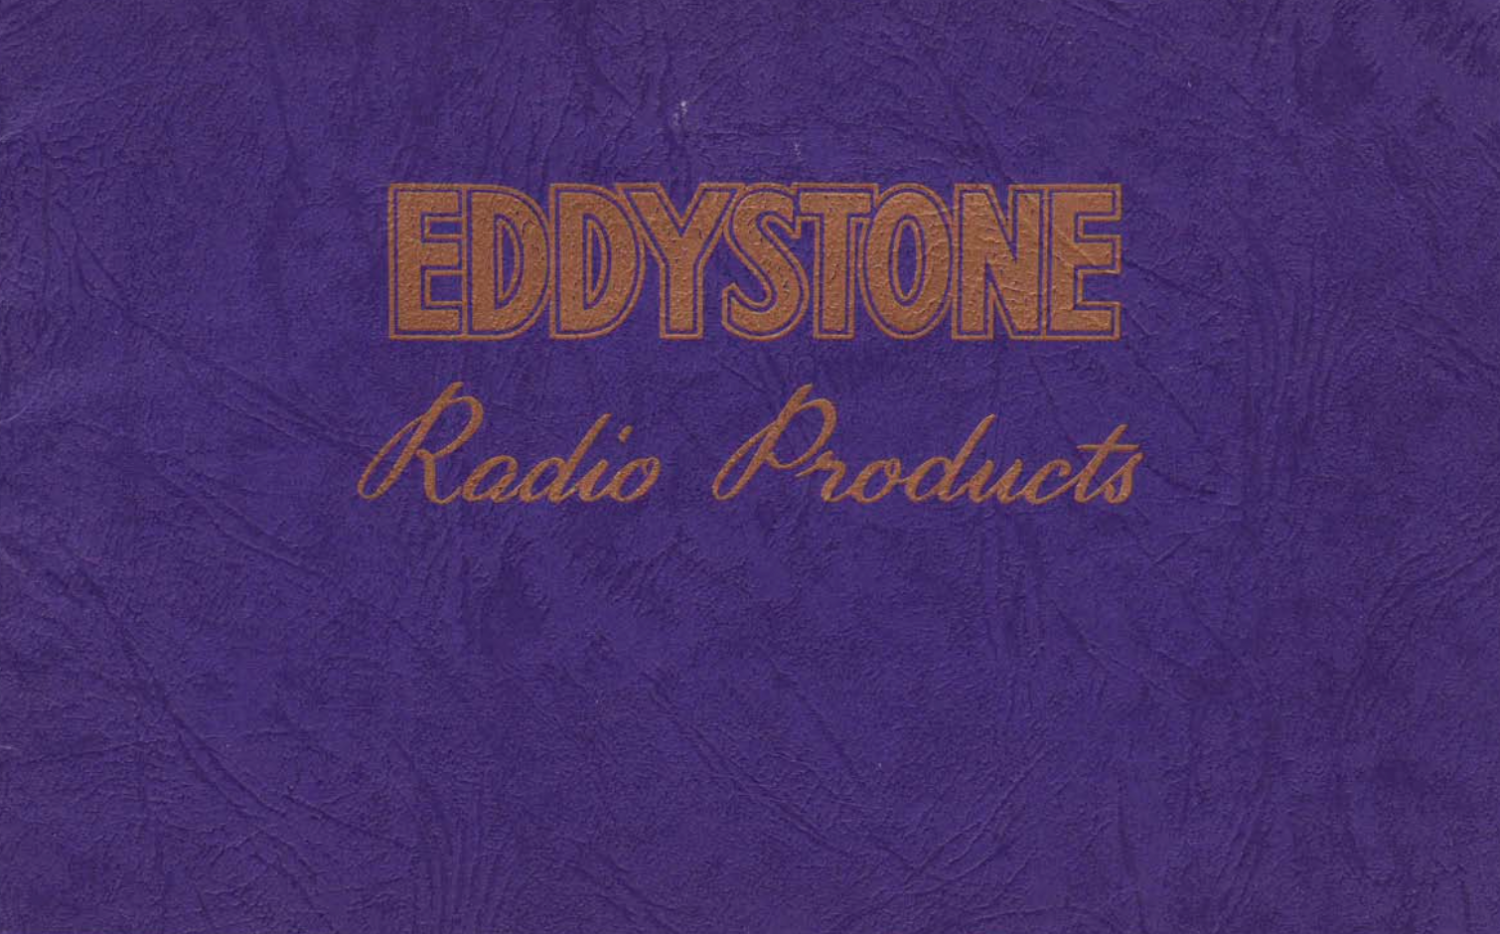 Eddystone Radio Products Catalogue (1954)